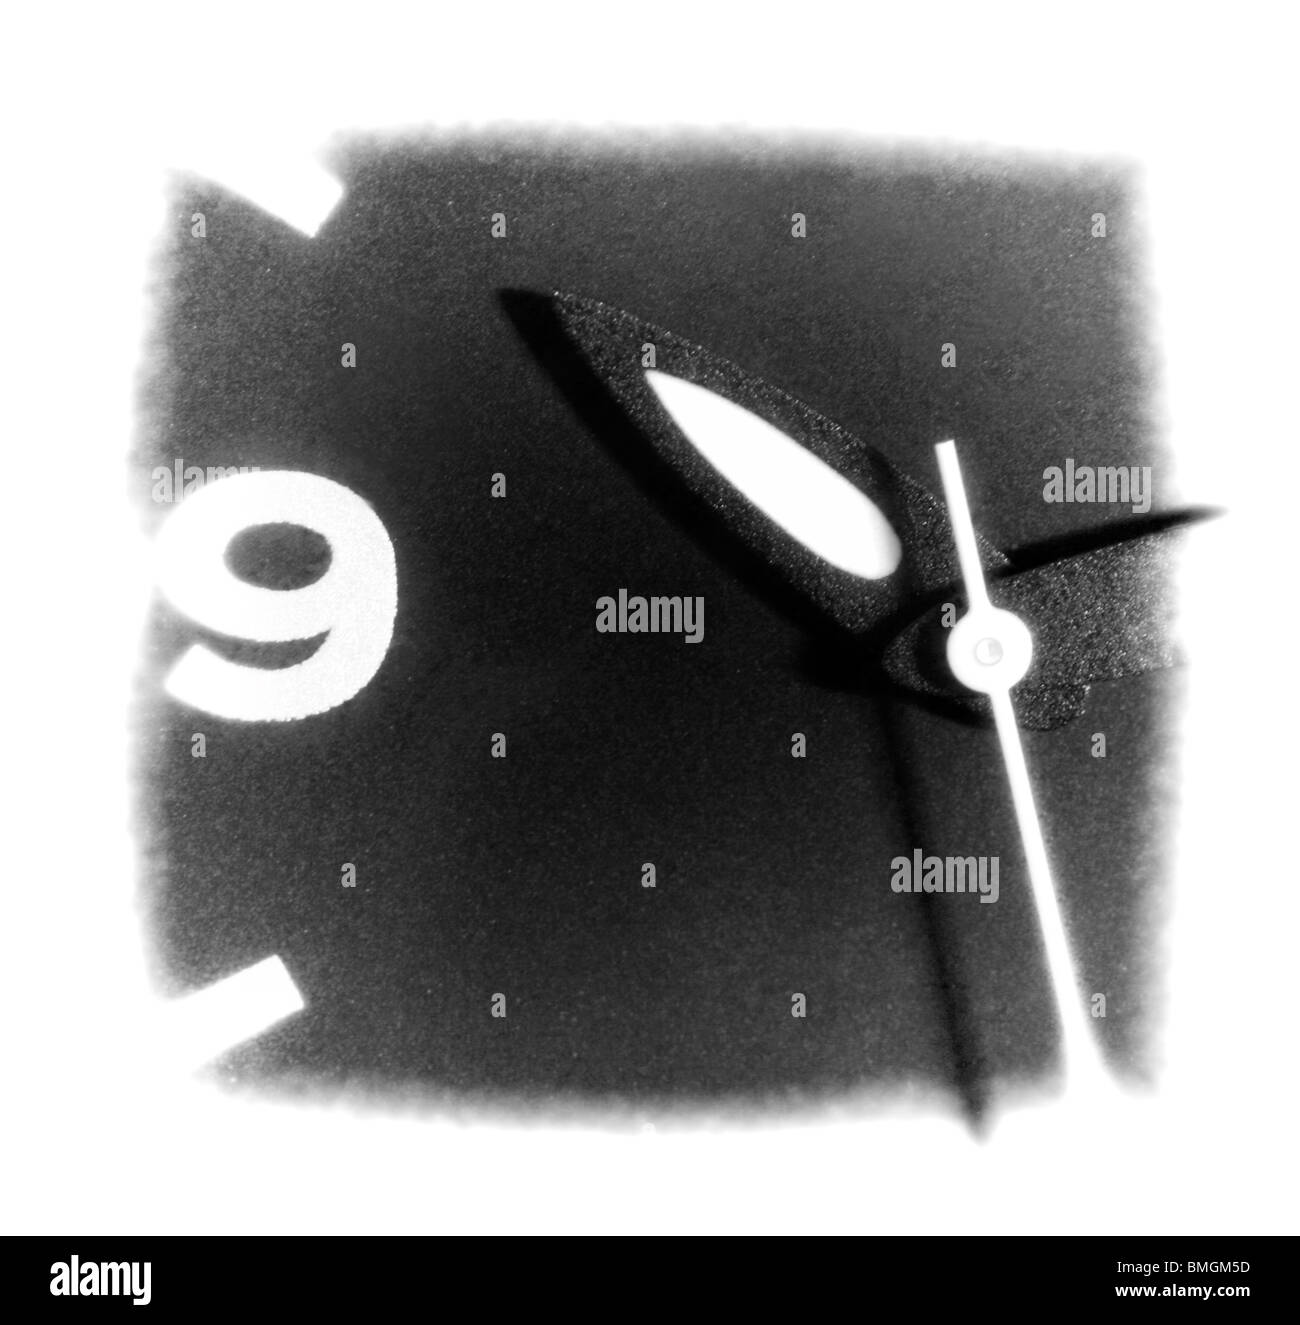 Mechanism alarm clock Black and White Stock Photos & Images - Alamy